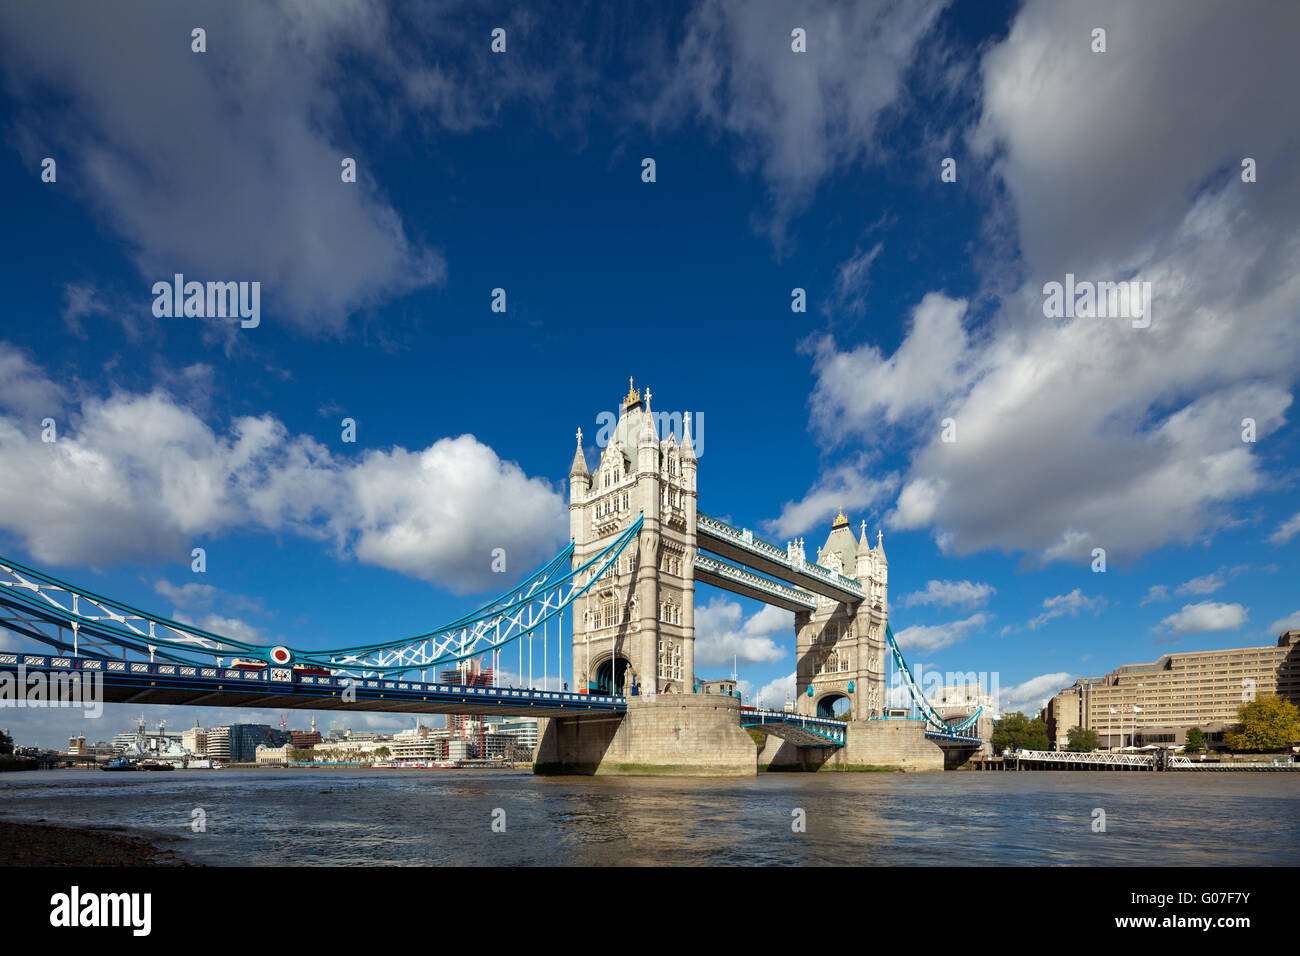 The famous Tower Bridge in London, UK Stock Photo